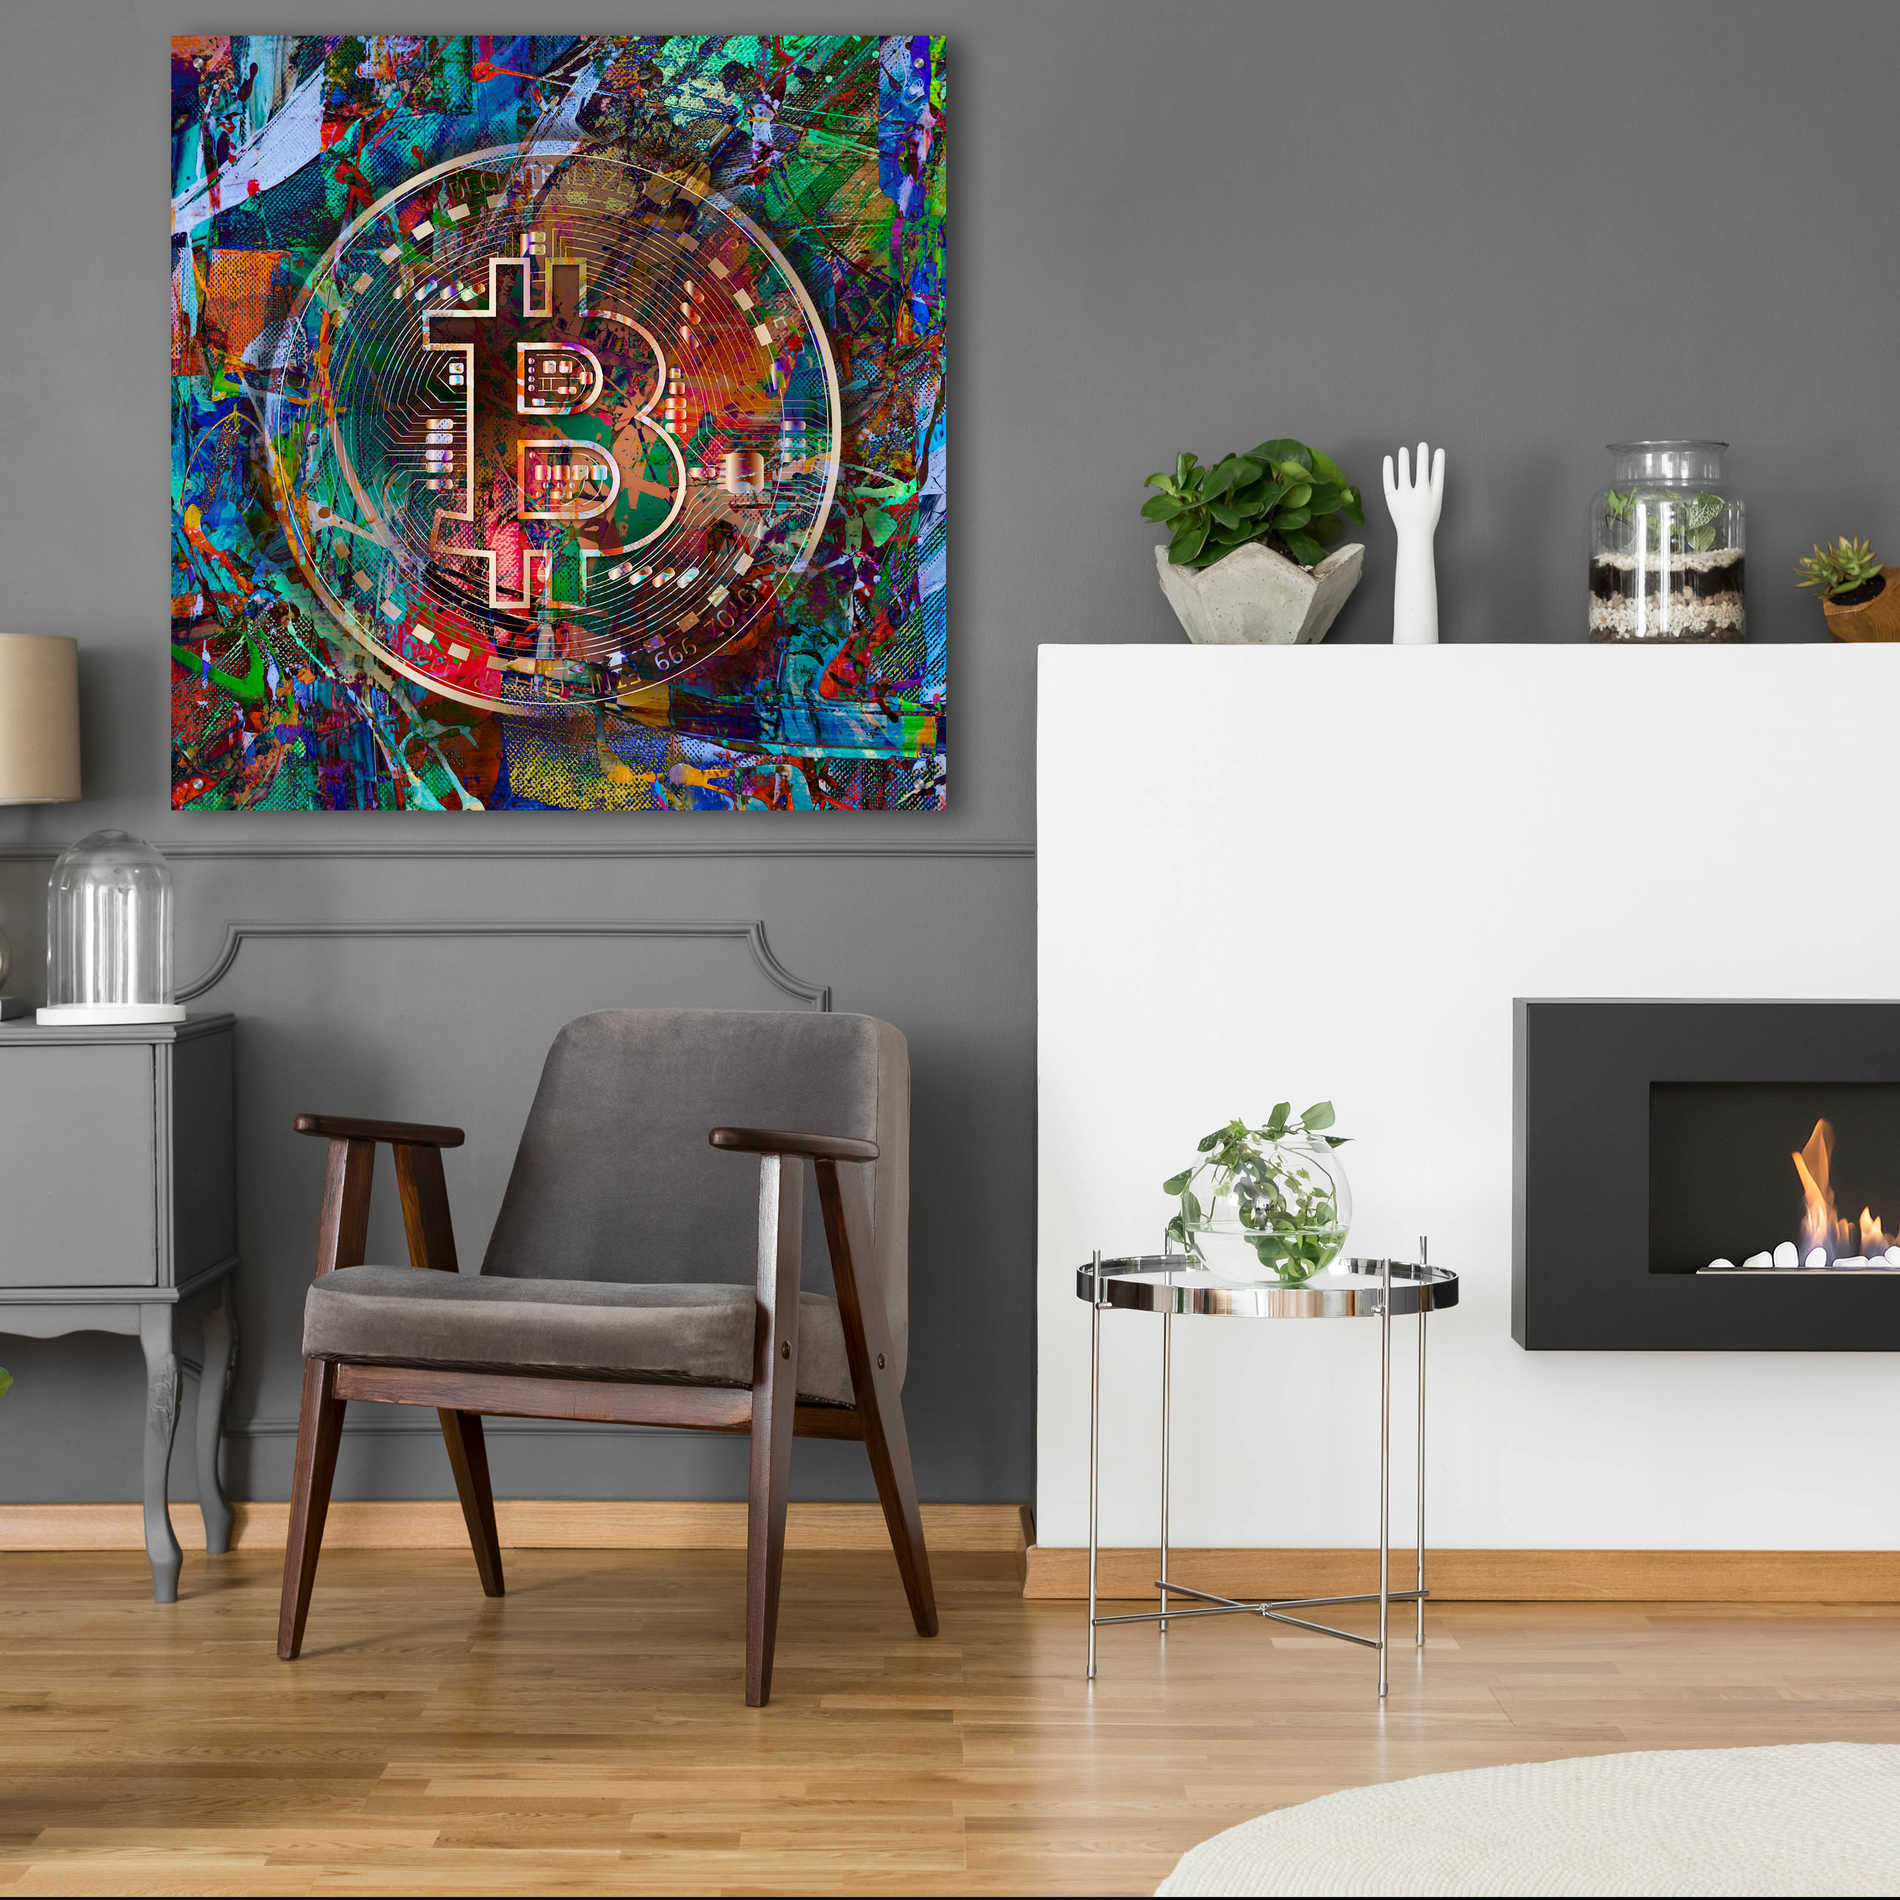 Epic Art 'Bitcoin Bronze Abstract' by Epic Portfolio Acrylic Glass Wall Art,36x36